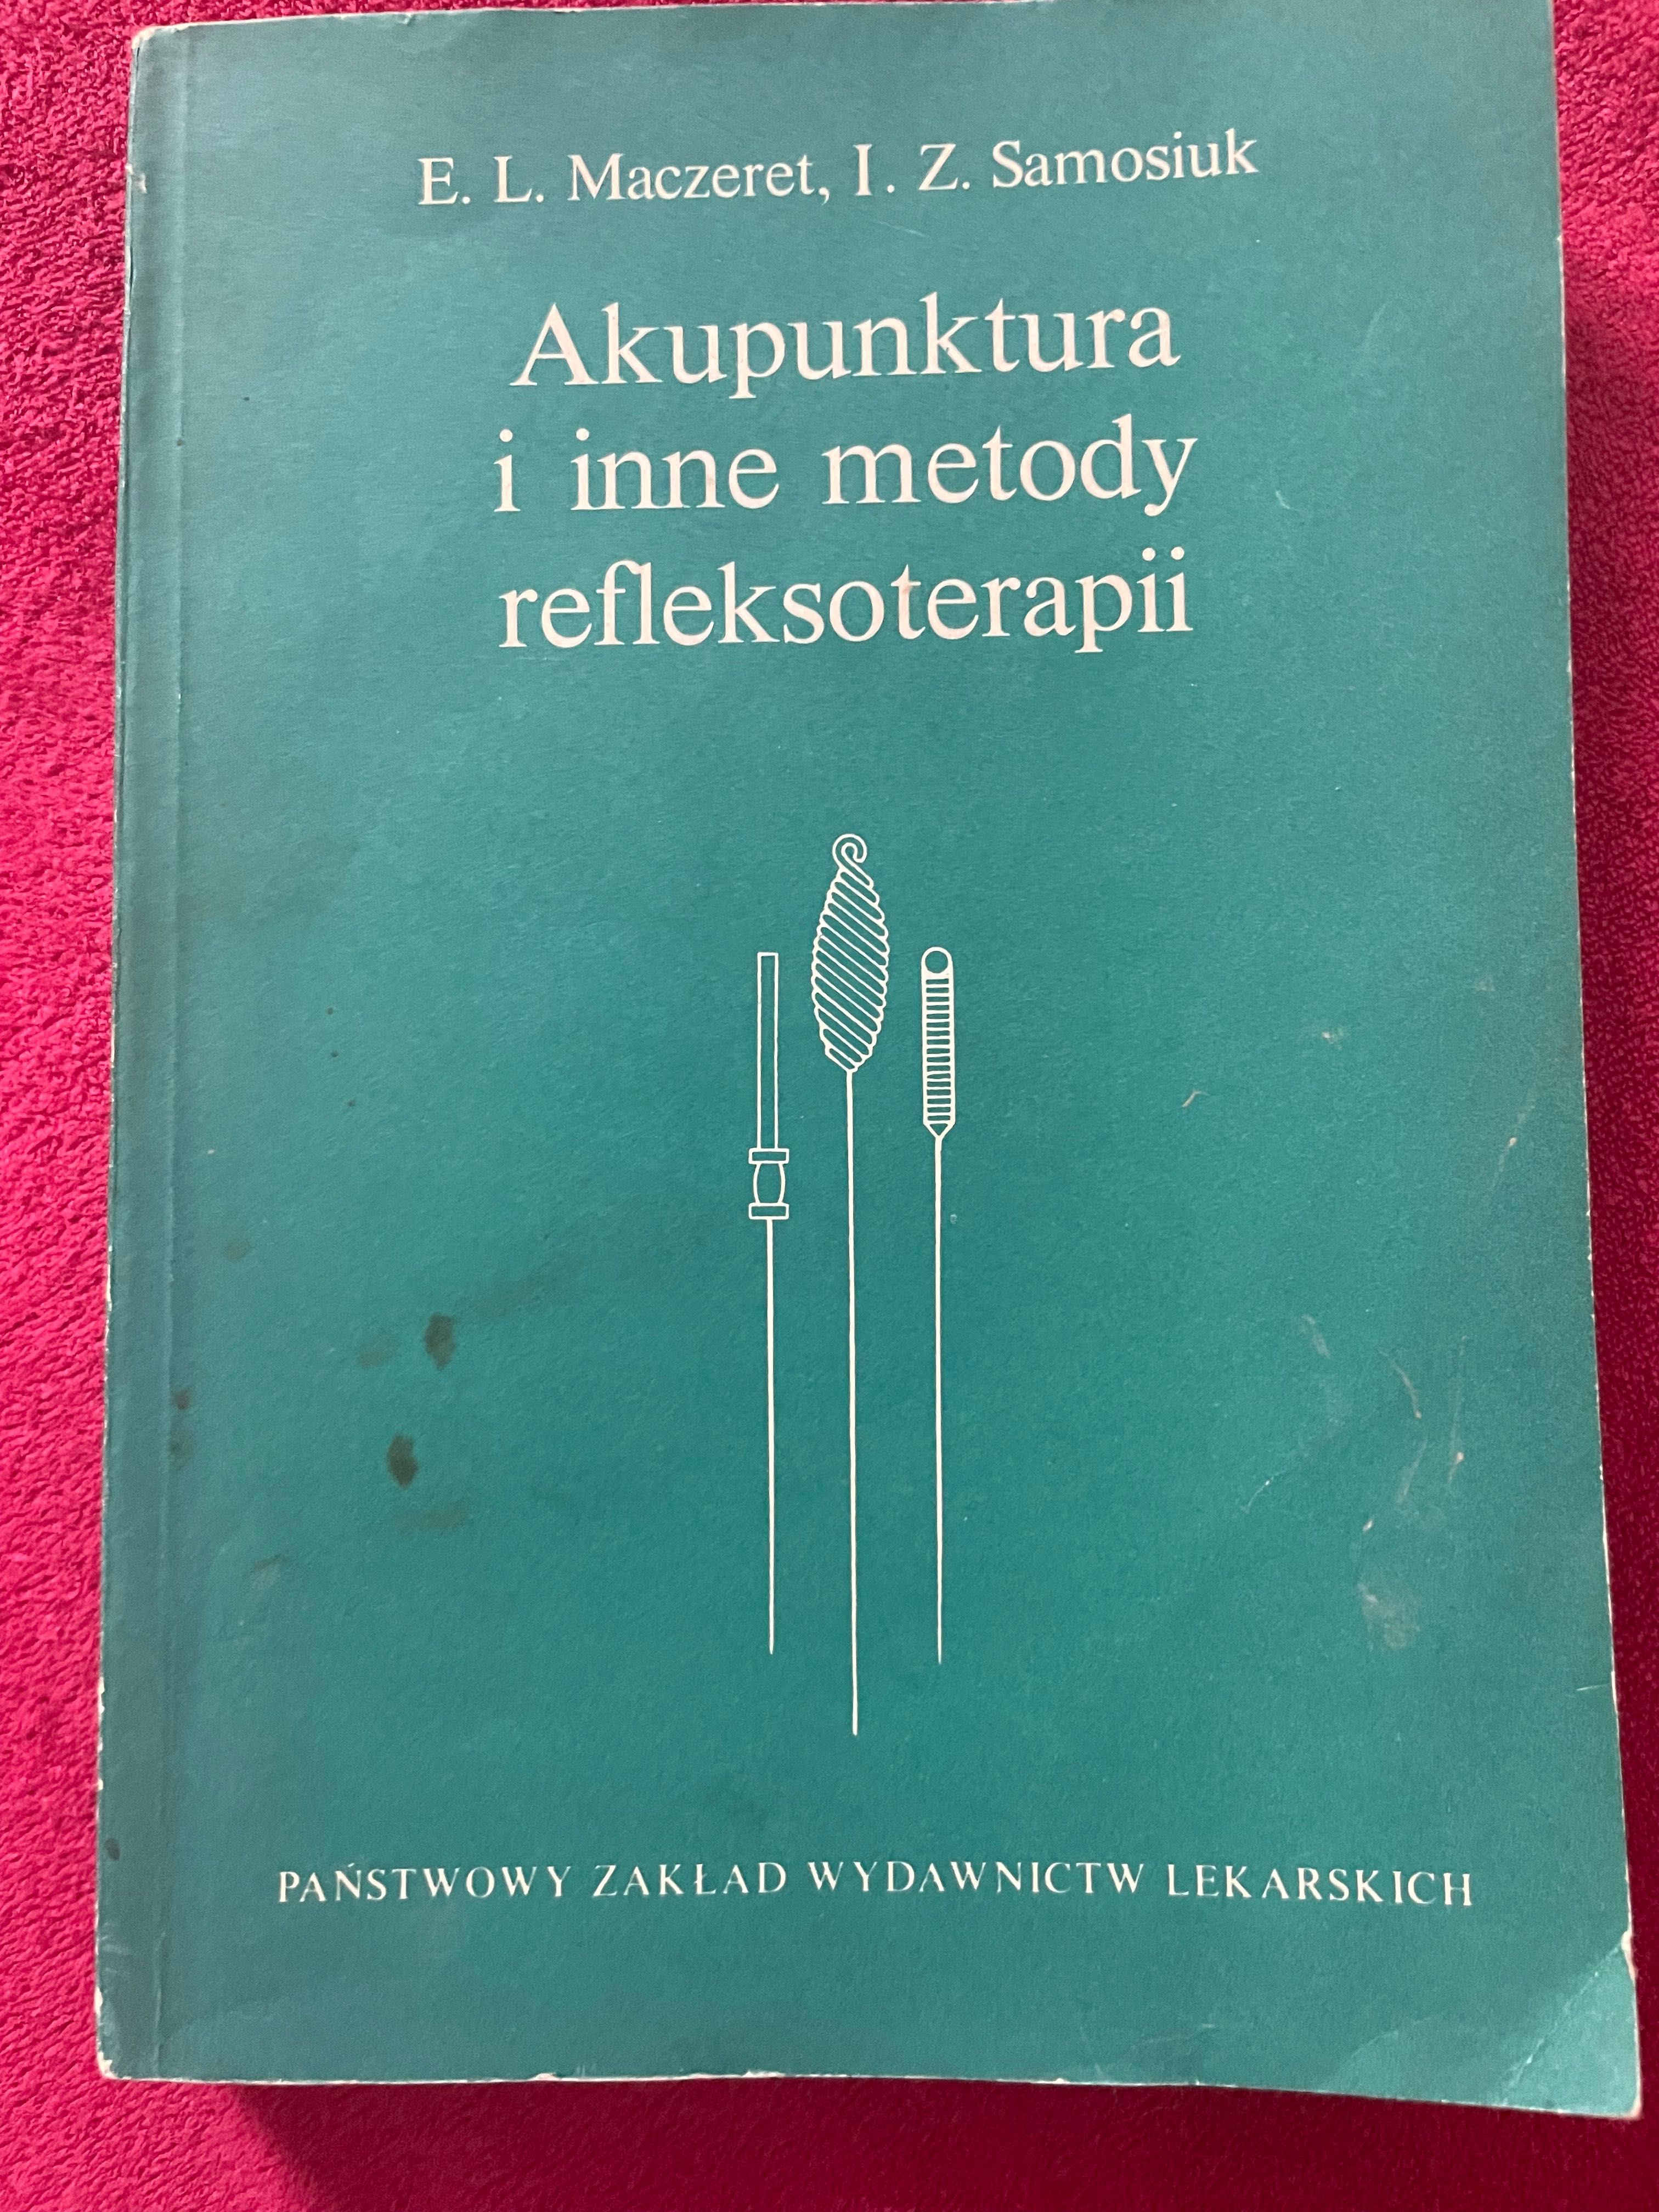 Akupunktura i inne metody refleksoterapii Maczeret, Samosiuk